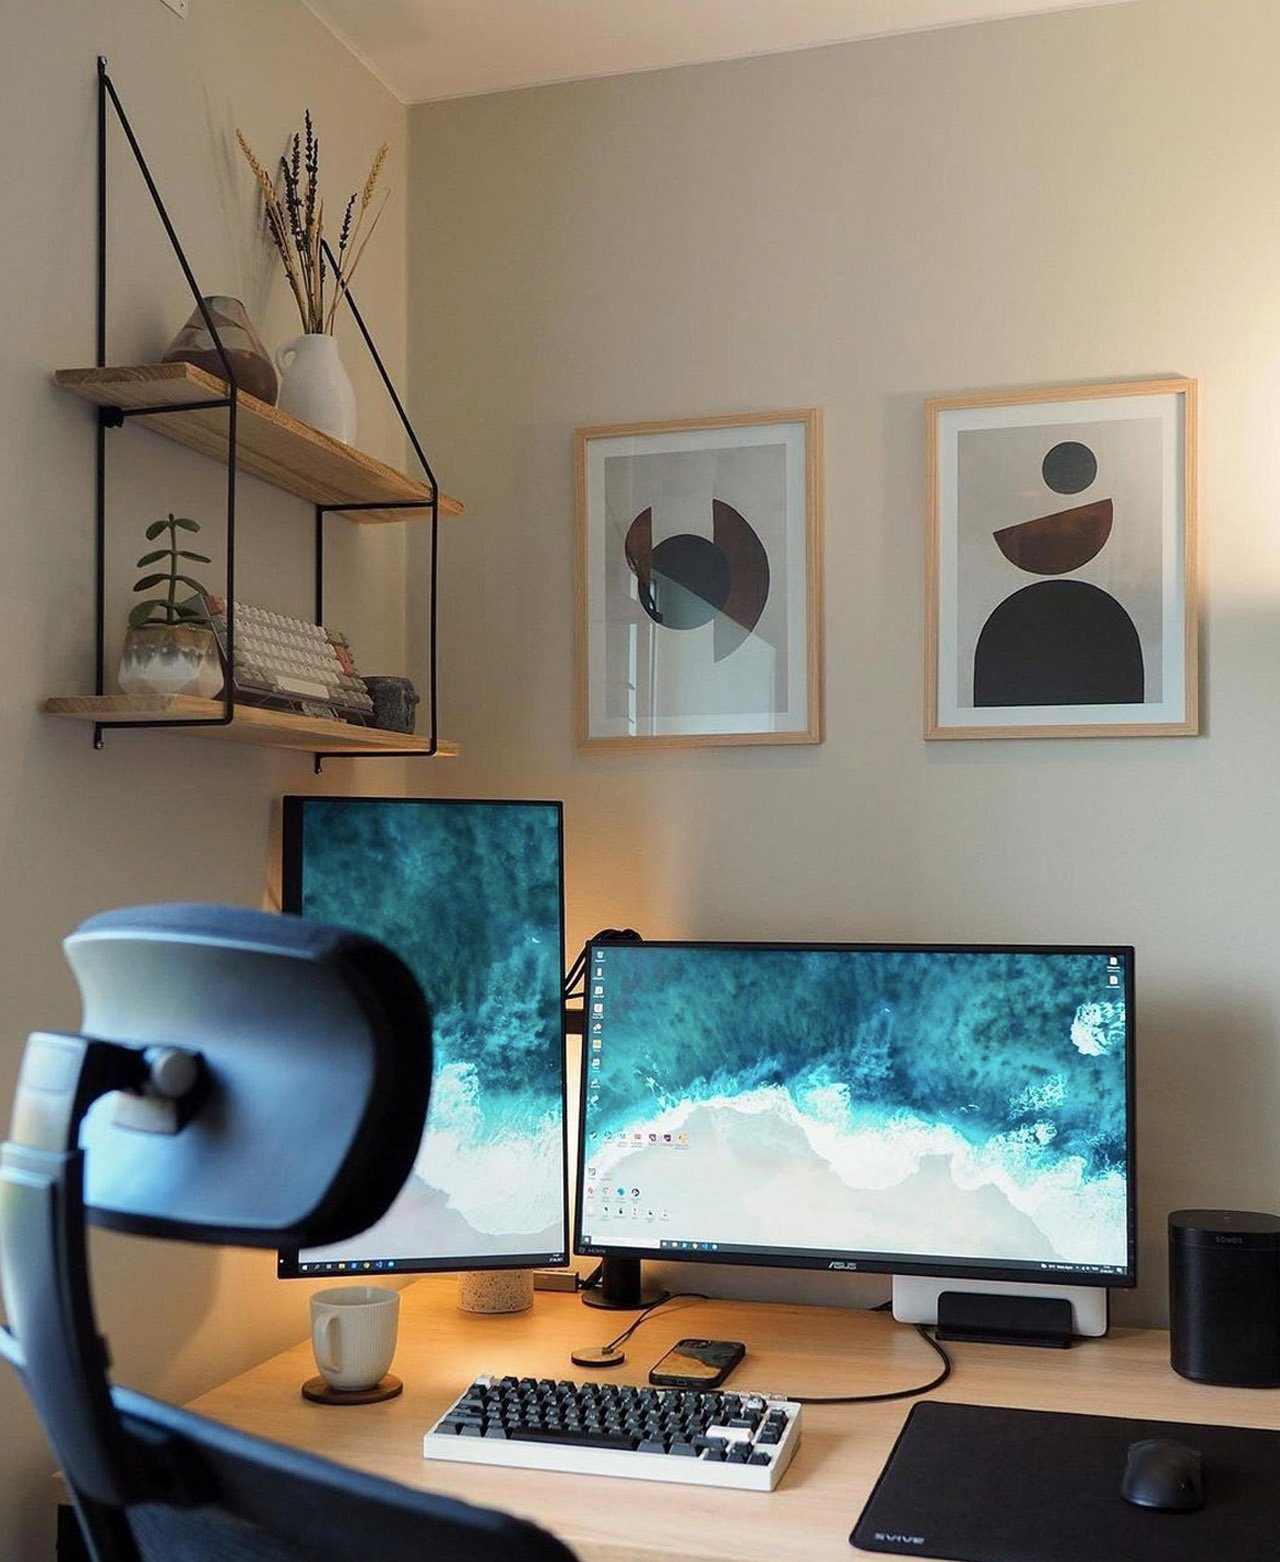 https://www.yankodesign.com/images/design_news/2021/10/desk-setups/desk_setups_modern_small_spaces_09.jpg